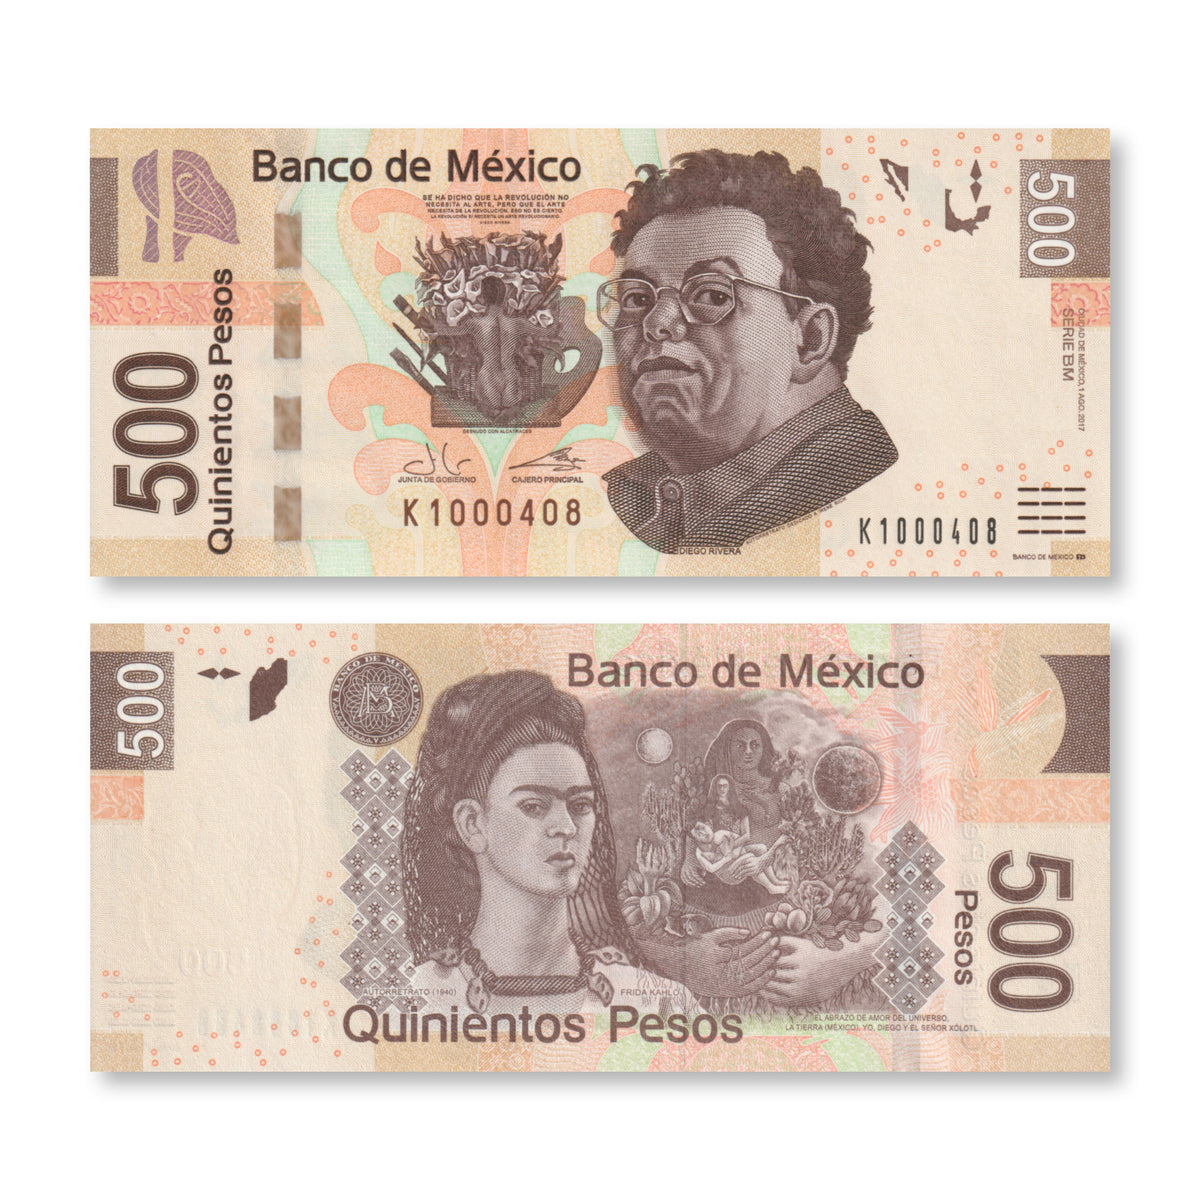 Mexico 500 Pesos, 2017, B708m, P126, UNC - Robert's World Money - World Banknotes